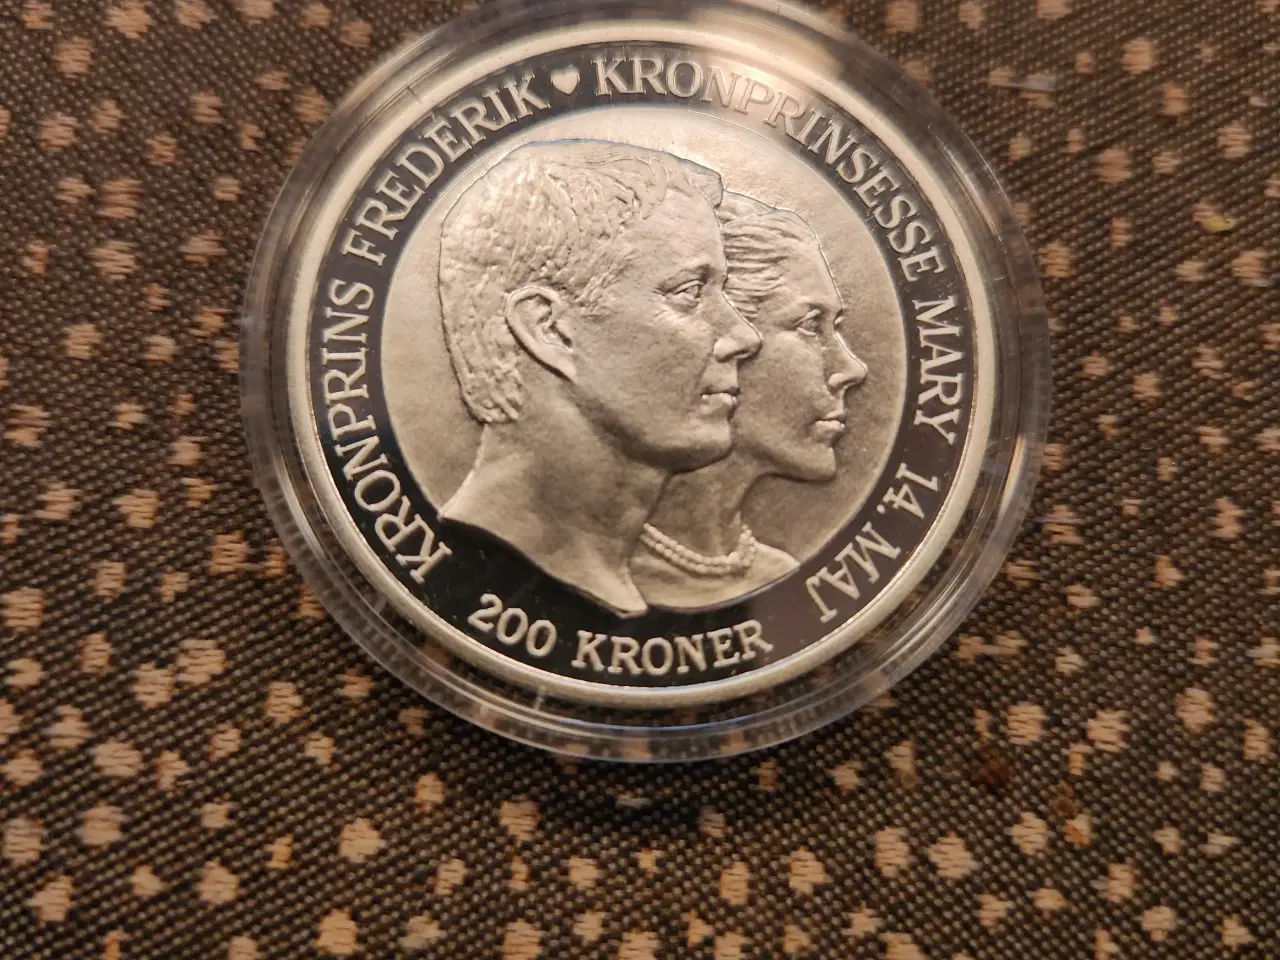 Billede 2 - Frederik og Mary bryllupsmønt fra 2004. 